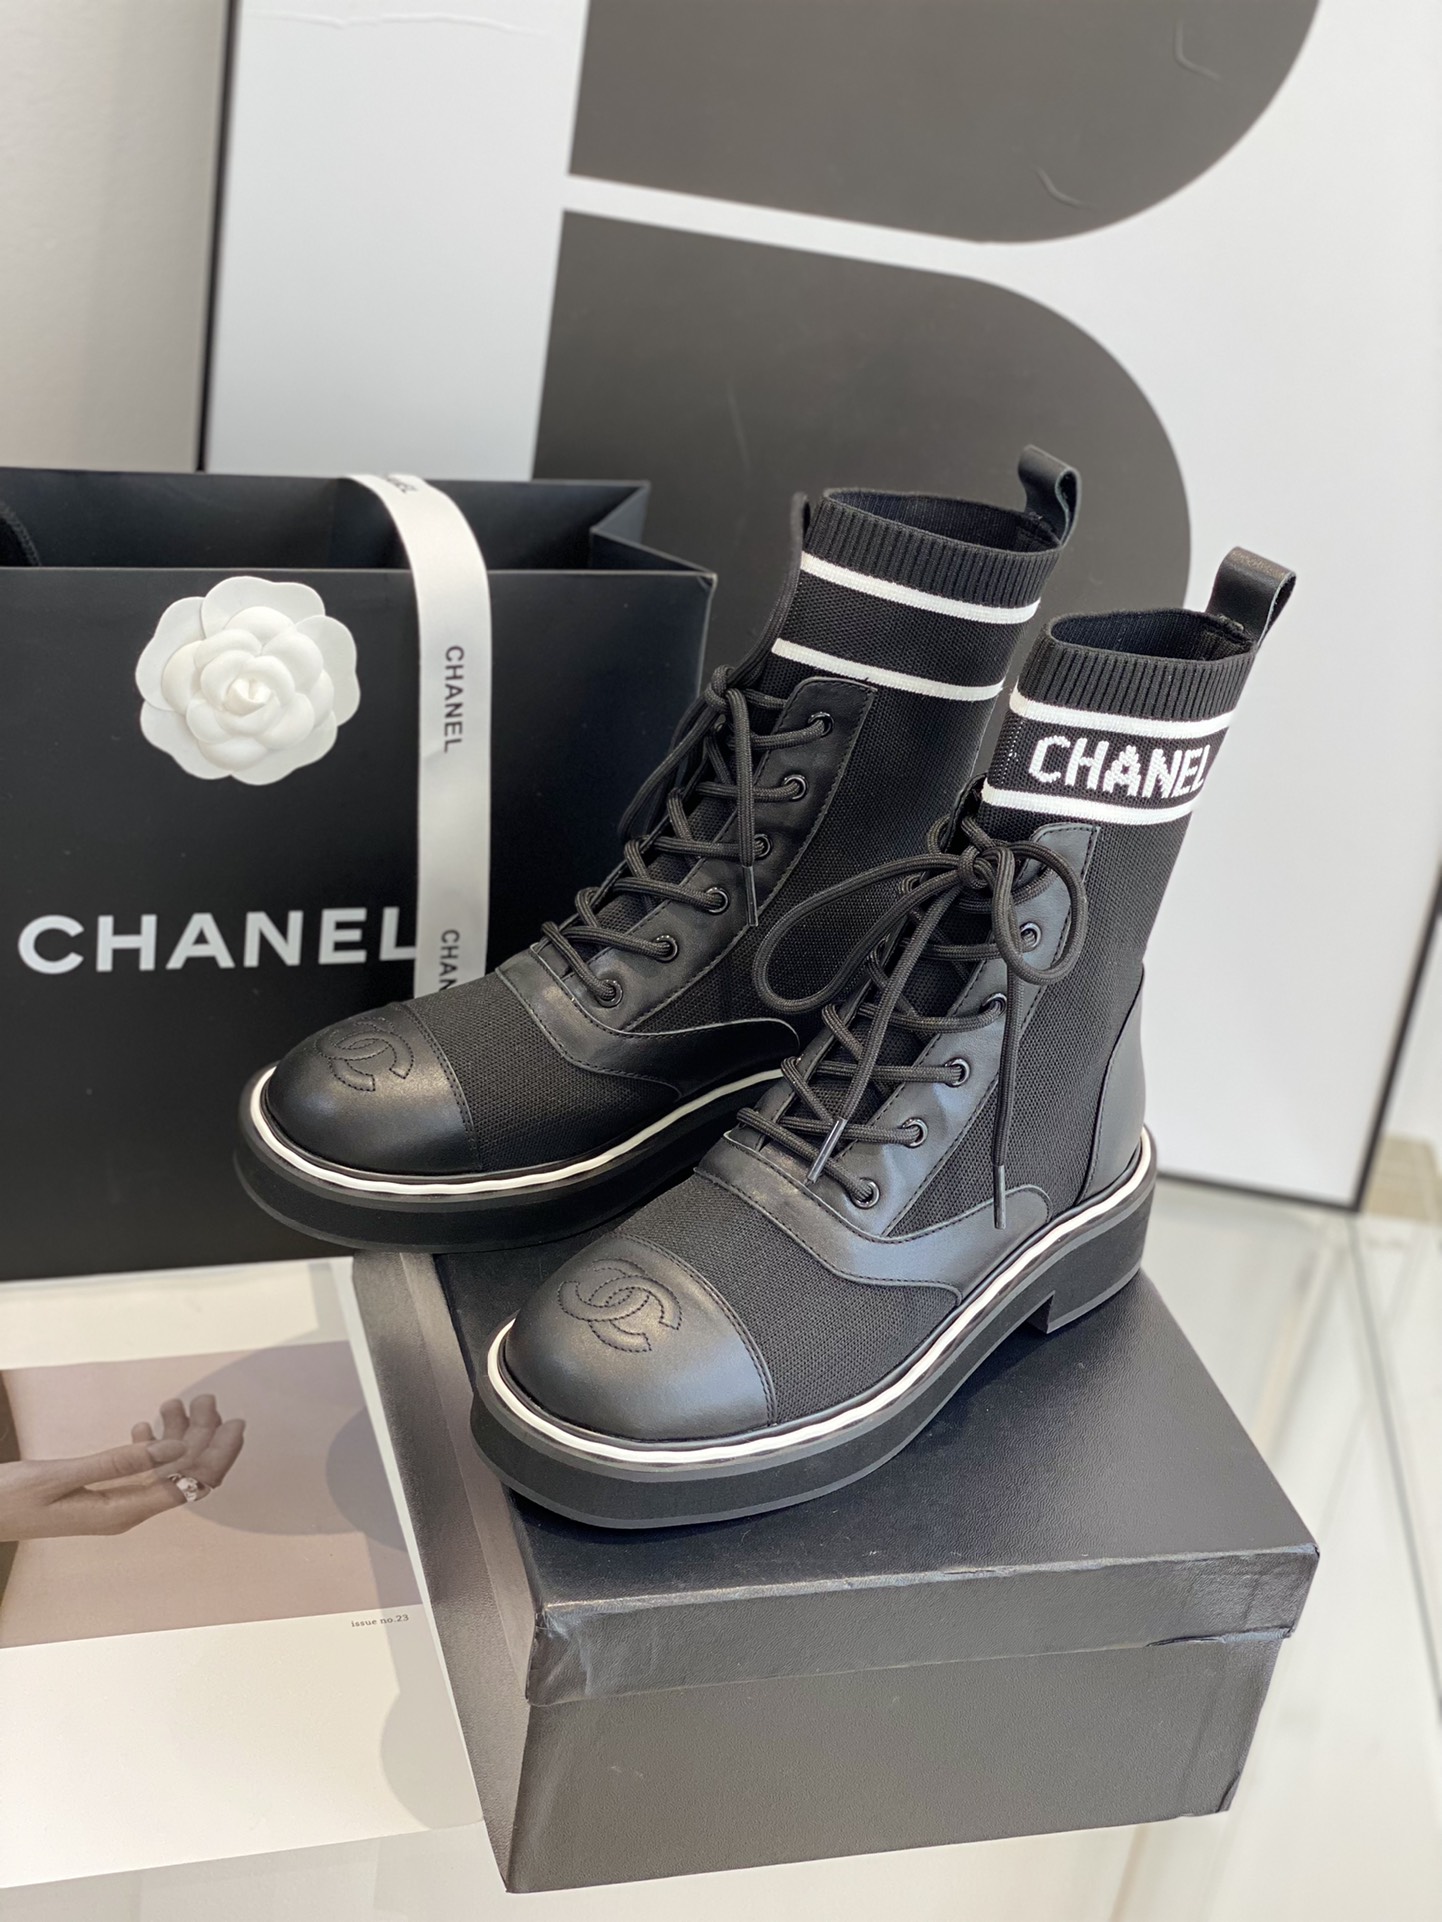 Chanel runway model boots!